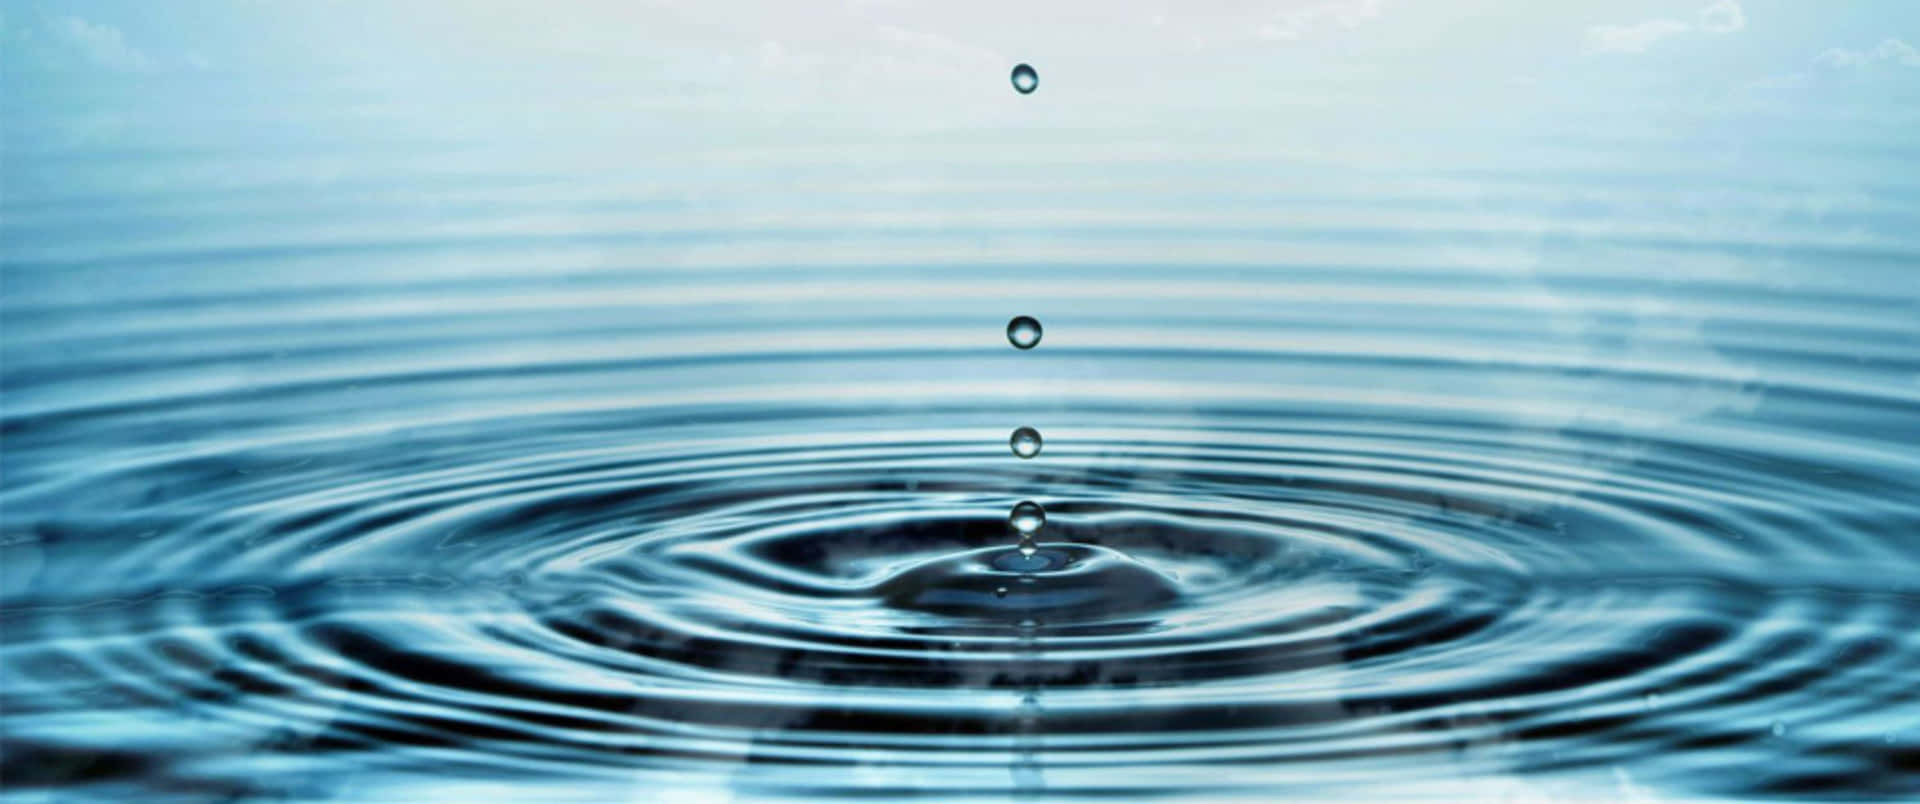 Baptism Background Water Droplets